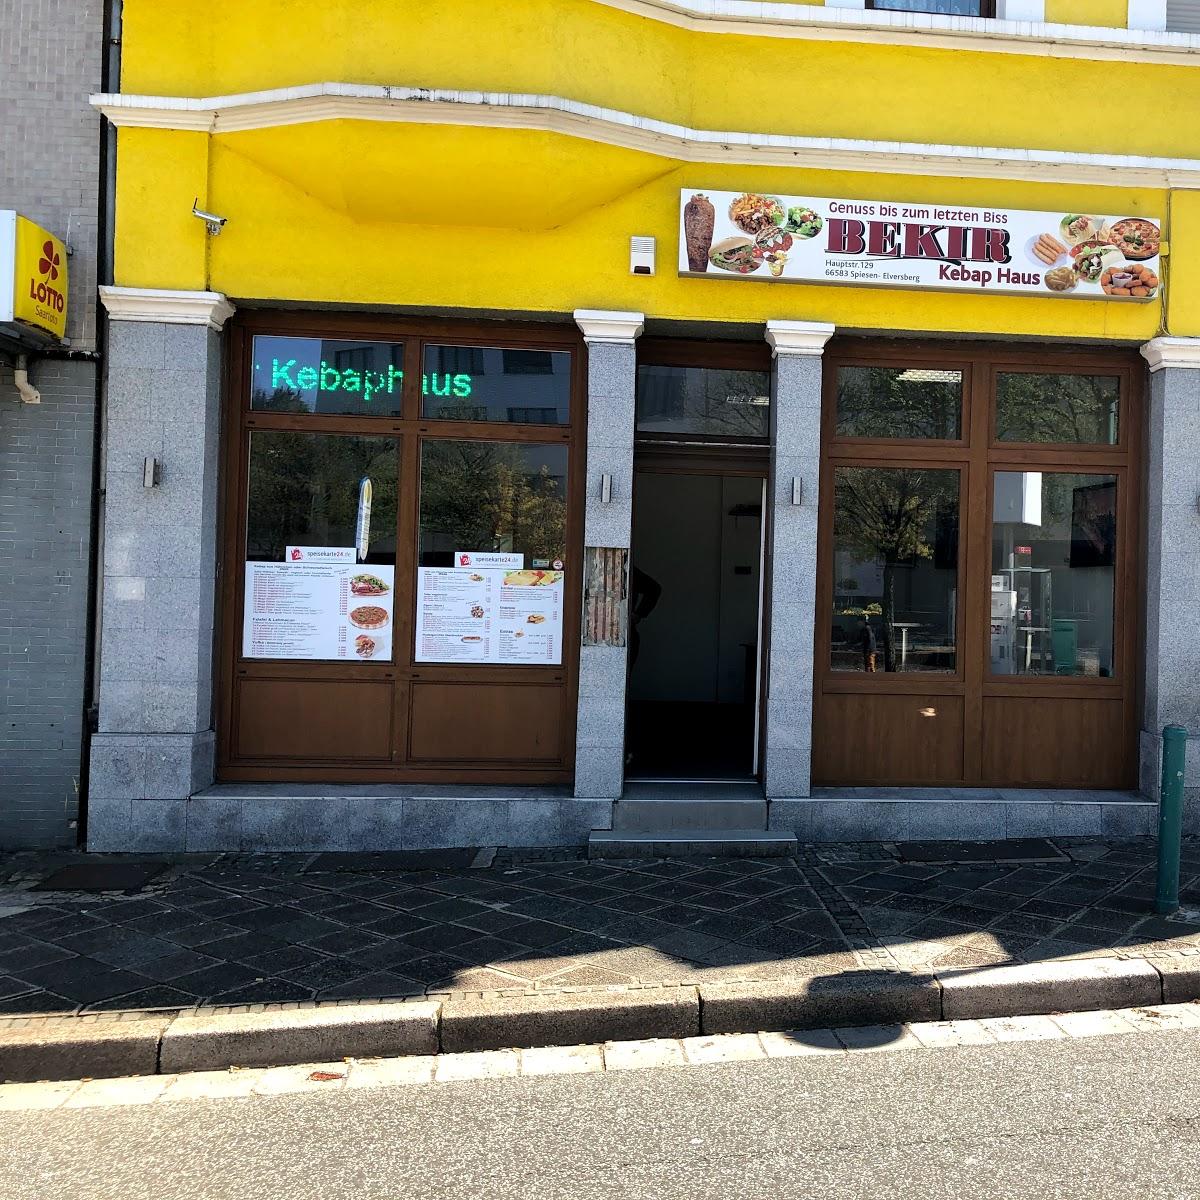 Restaurant "Bekir Kebaphaus" in Spiesen-Elversberg